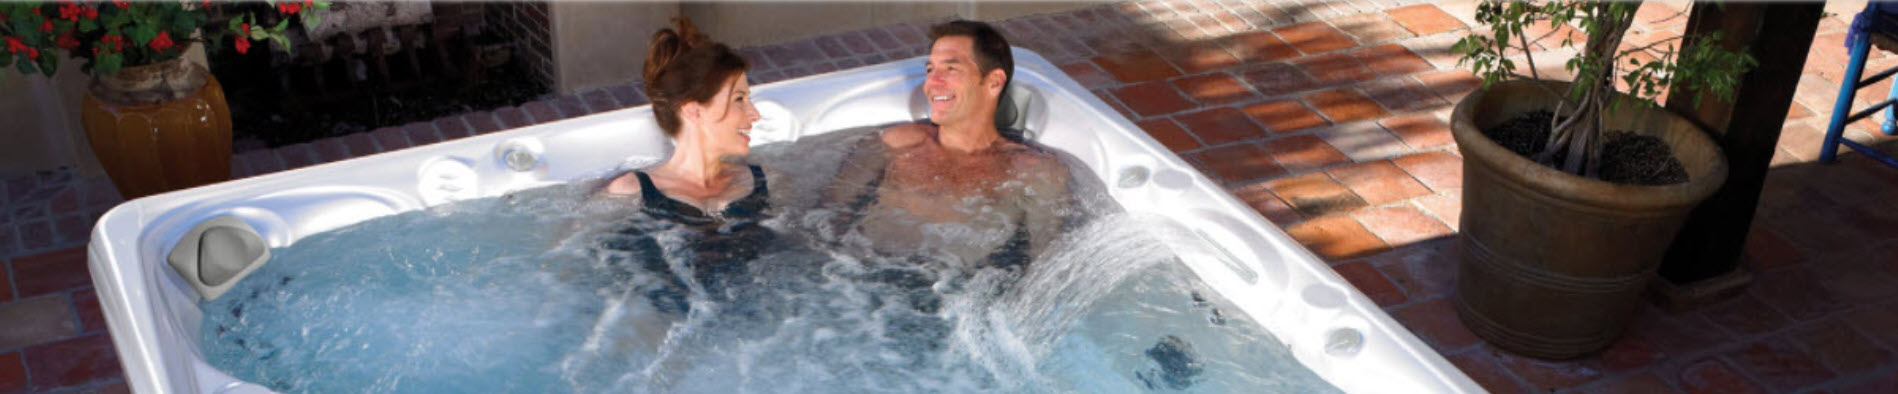 3 Ways to Save Money and Enjoy a Salt Water Hot Tub, Salt Water Spas Brandon